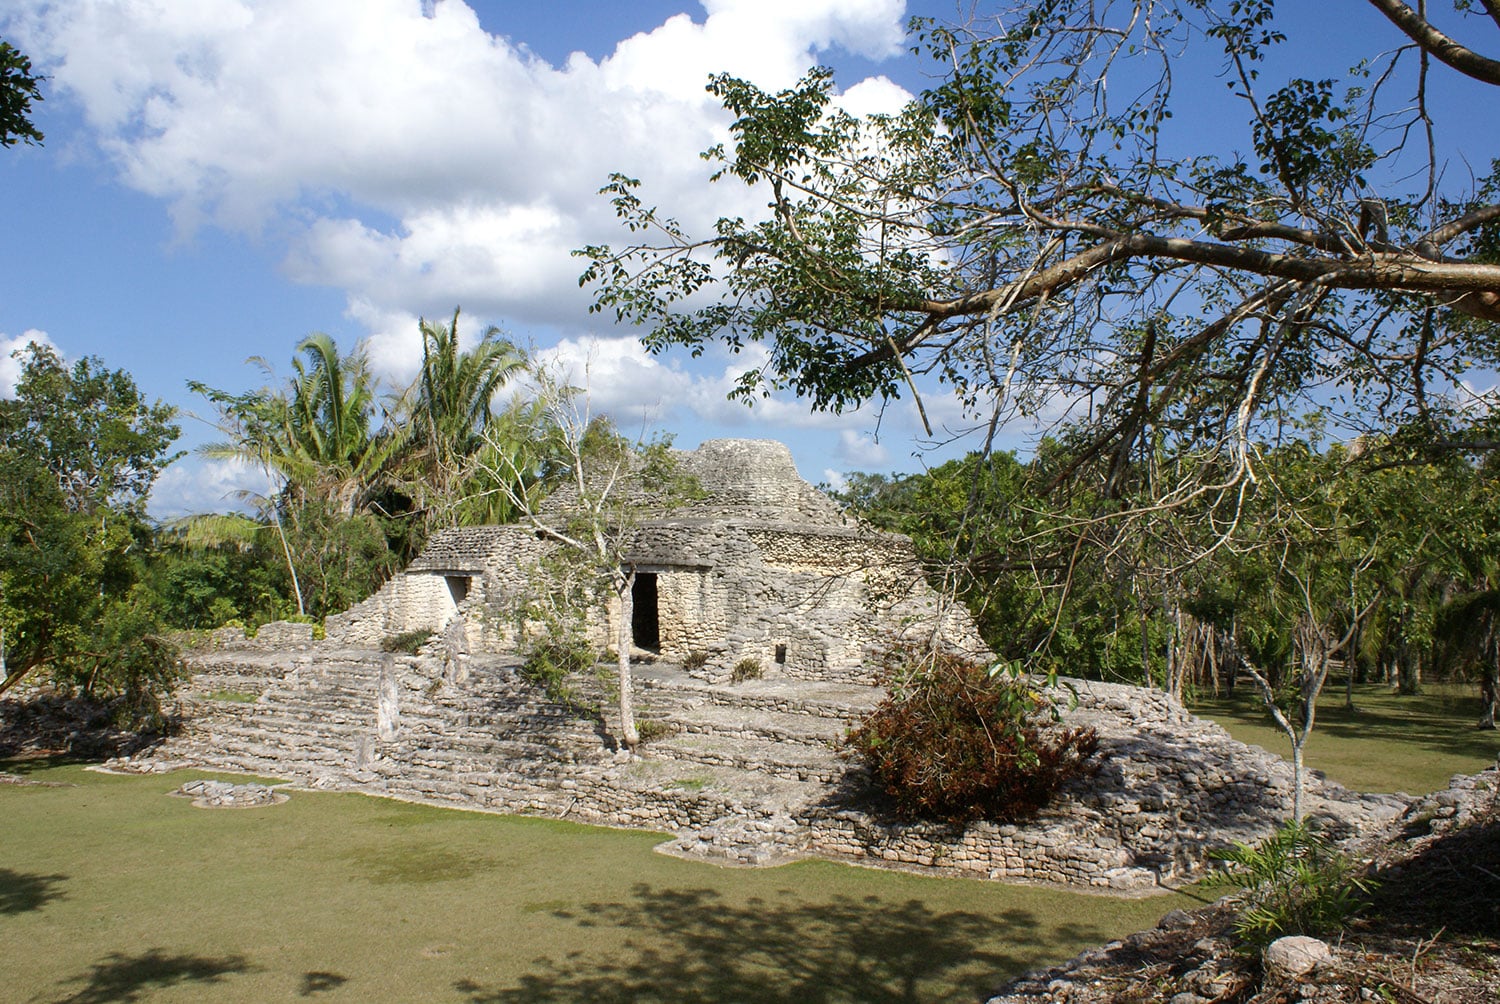 Adéntrate en la zona arqueológica Kohunlich, Quintana Roo